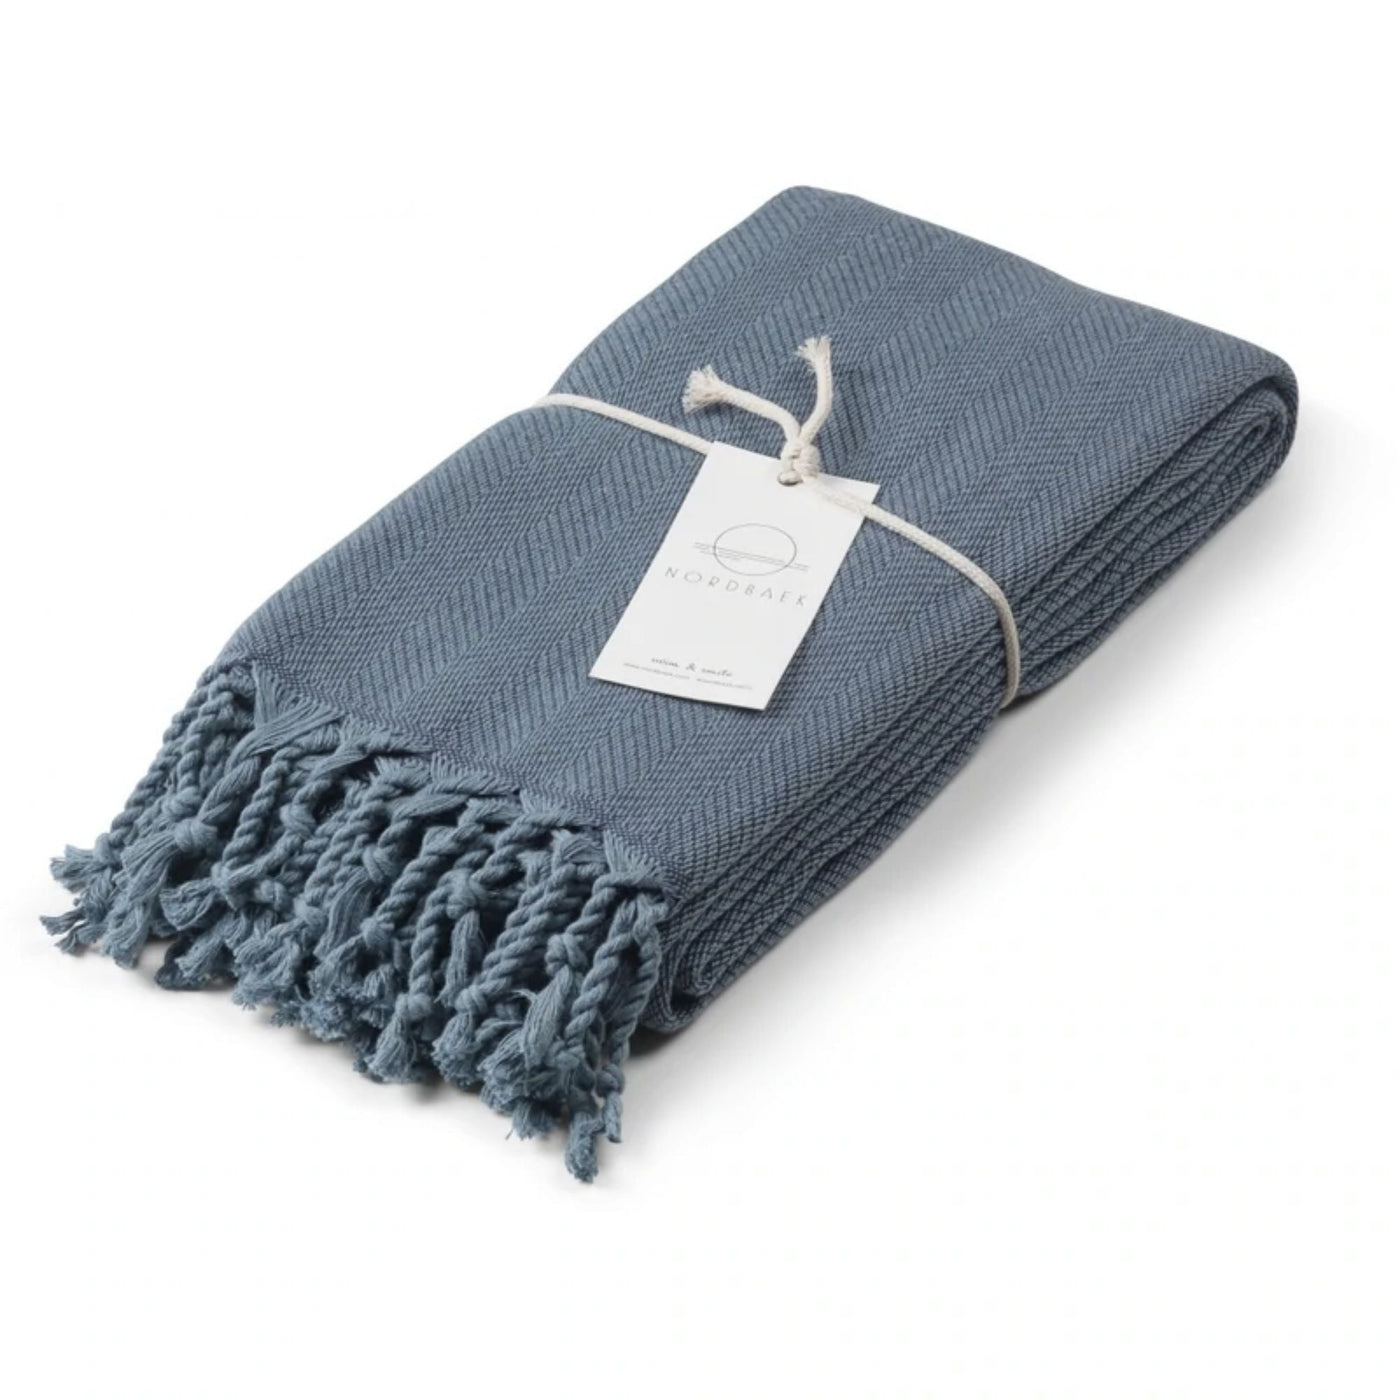 NORDBAEK Towels Navy Blue Nordic Hamam Towel - Cosy Comfort